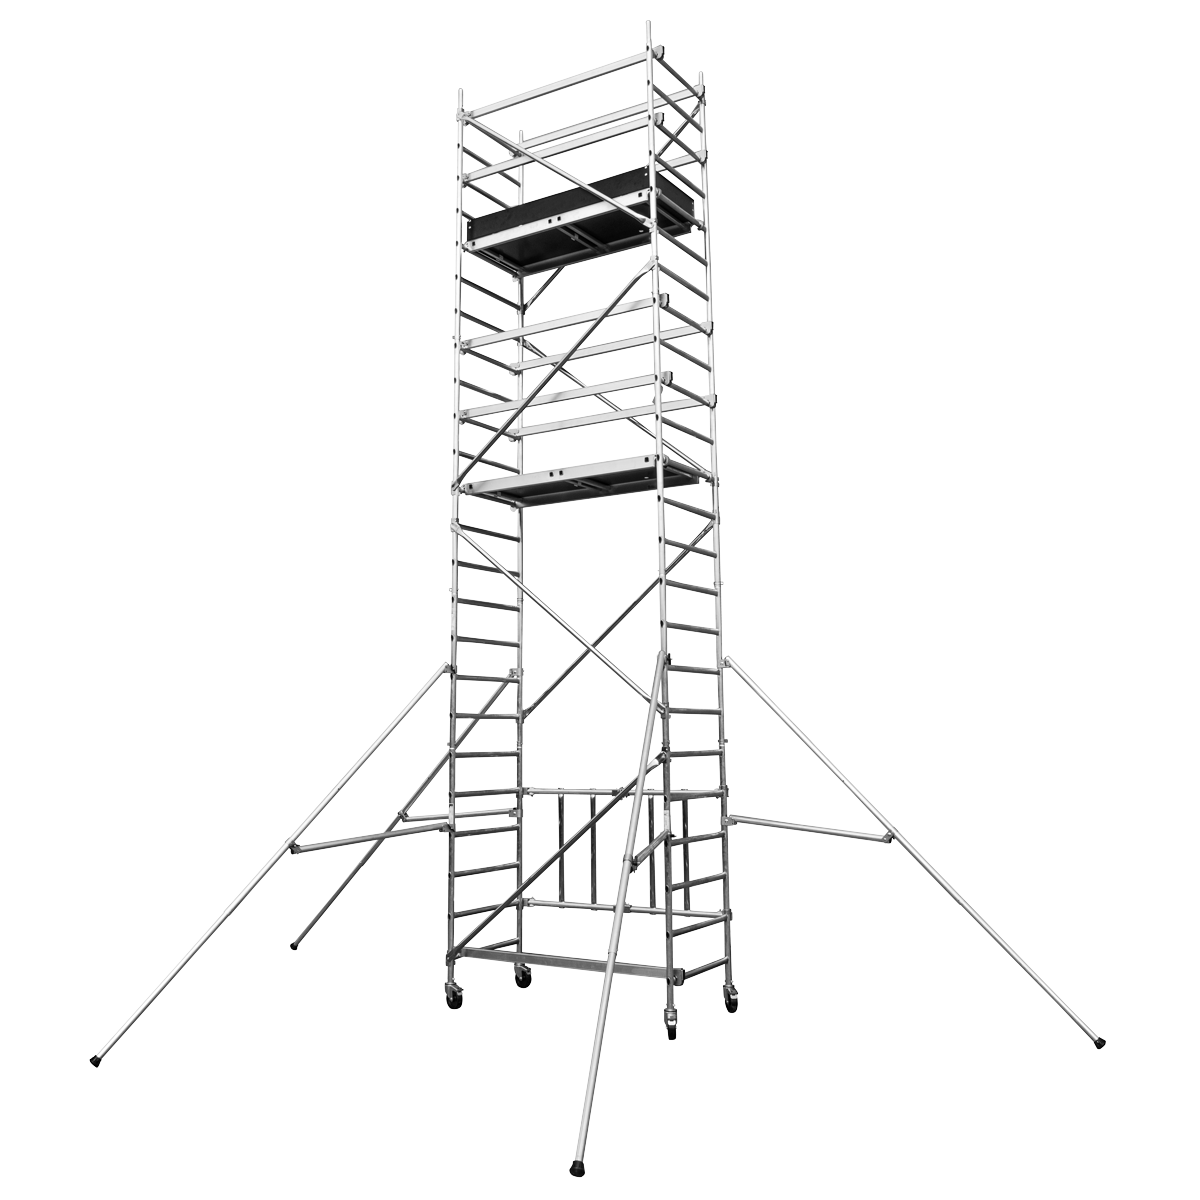 Platform Scaffold Tower Extension Pack 4 EN 1004-1